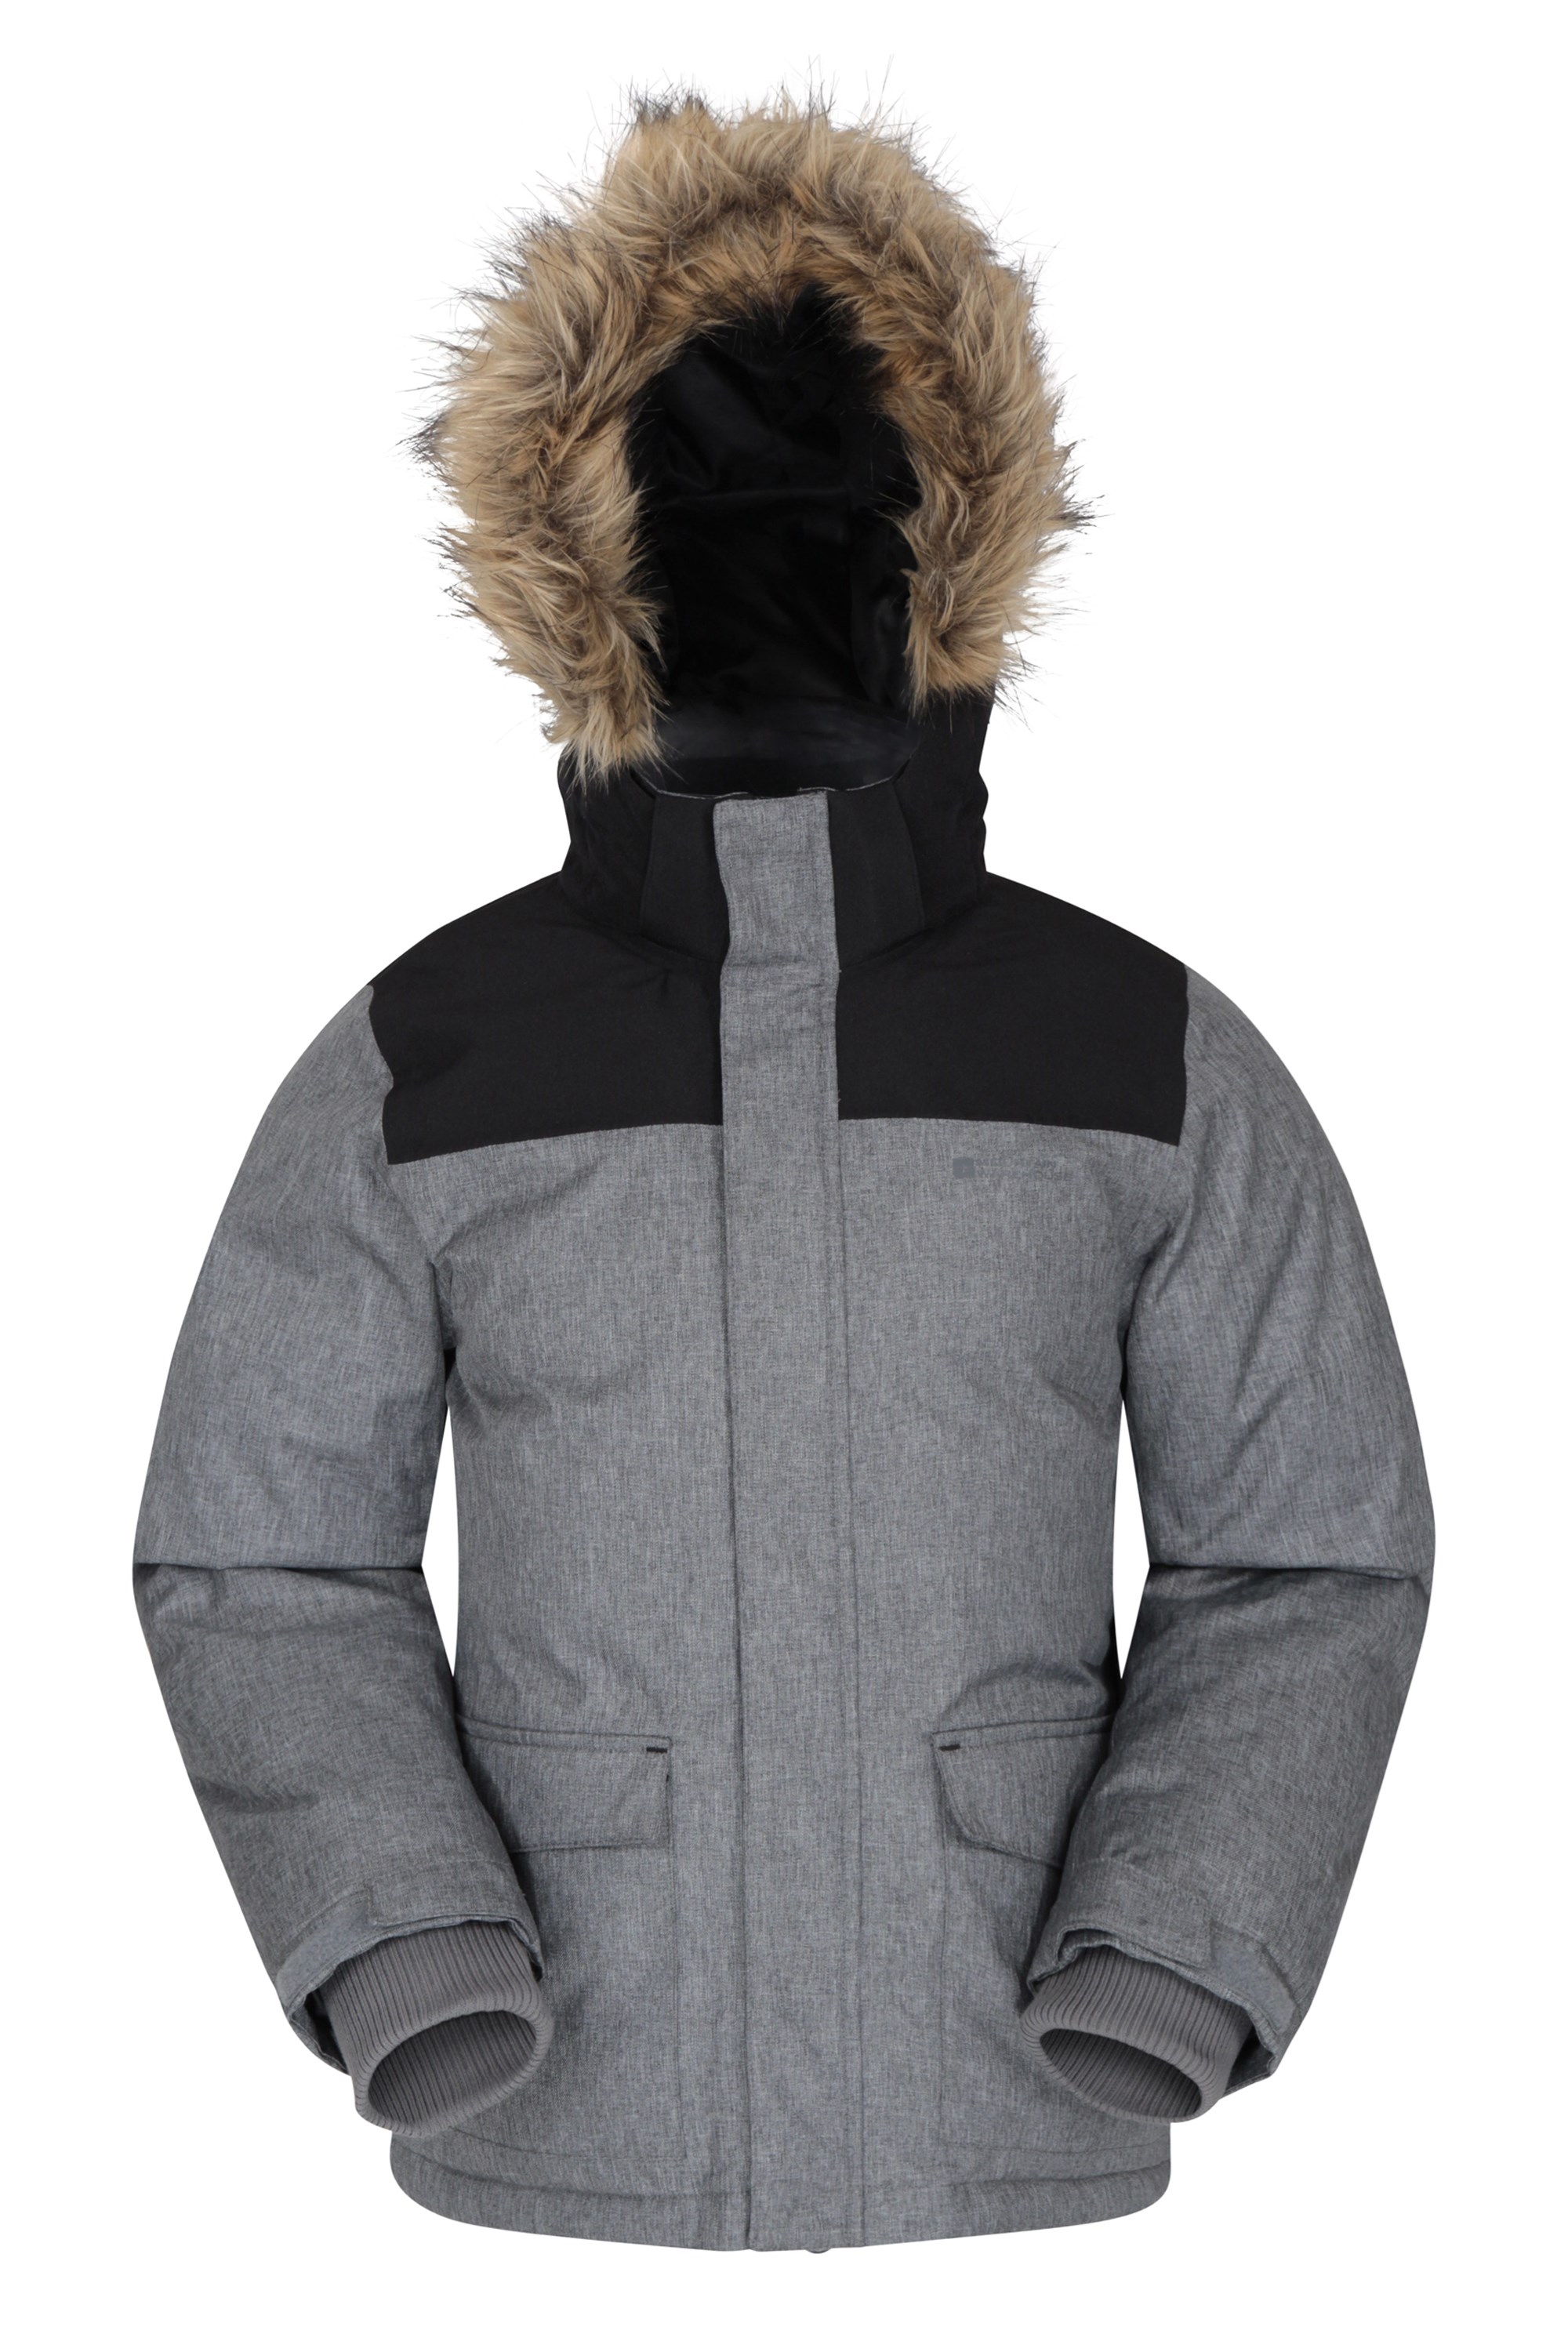 Mountain Warehouse Antarctic Kids Waterproof Down Padded Jacket Grey